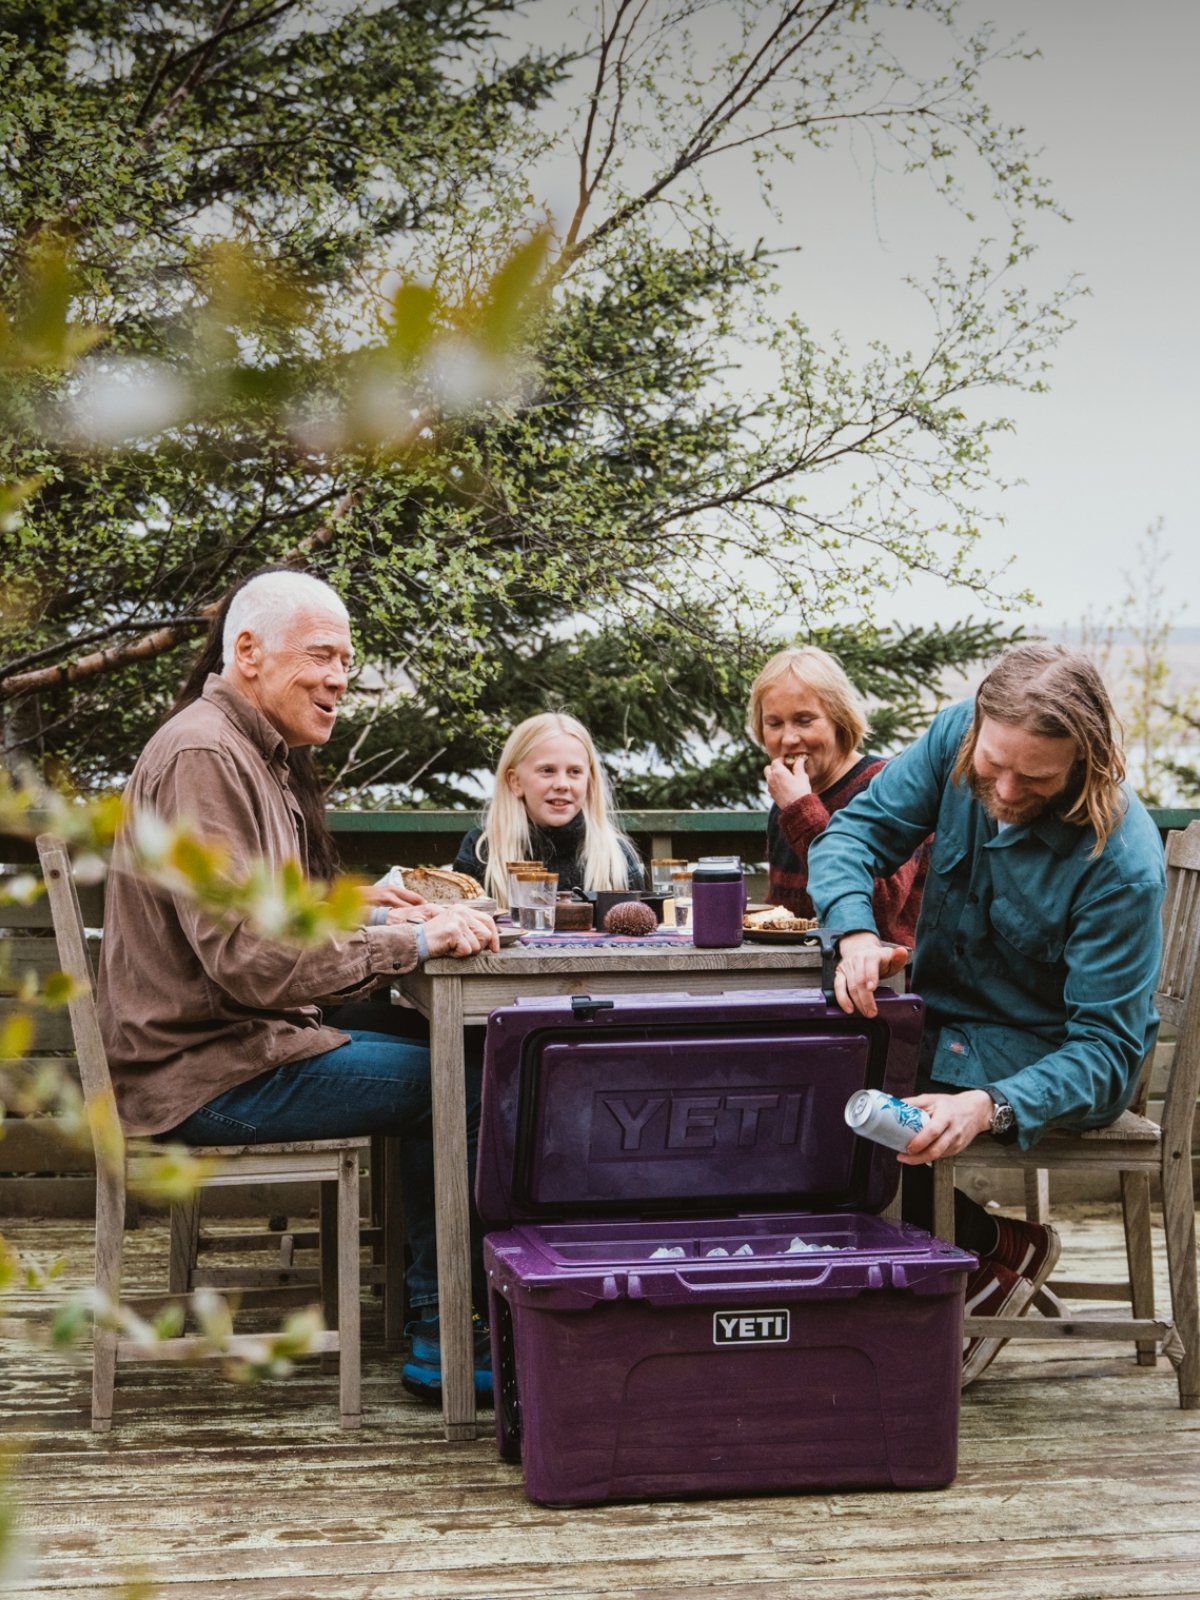 YETI- Daytrip Lunch Box Nordic Purple